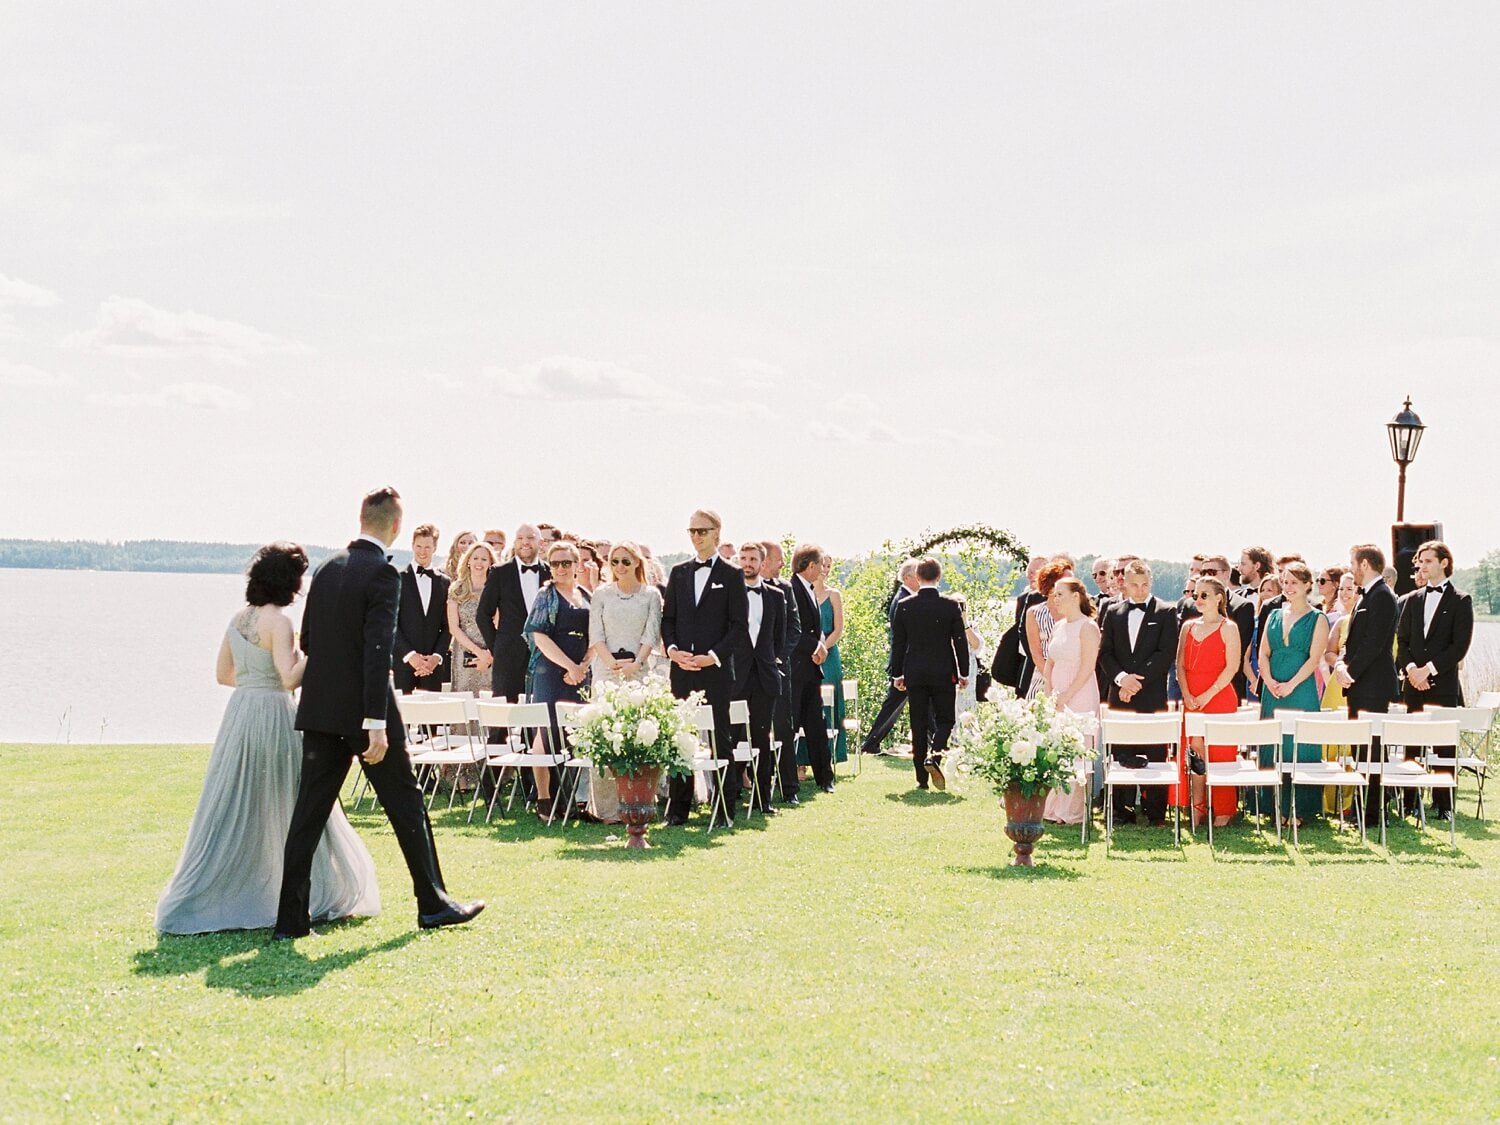 Wedding ceremony by the lake at Rånäs Slott